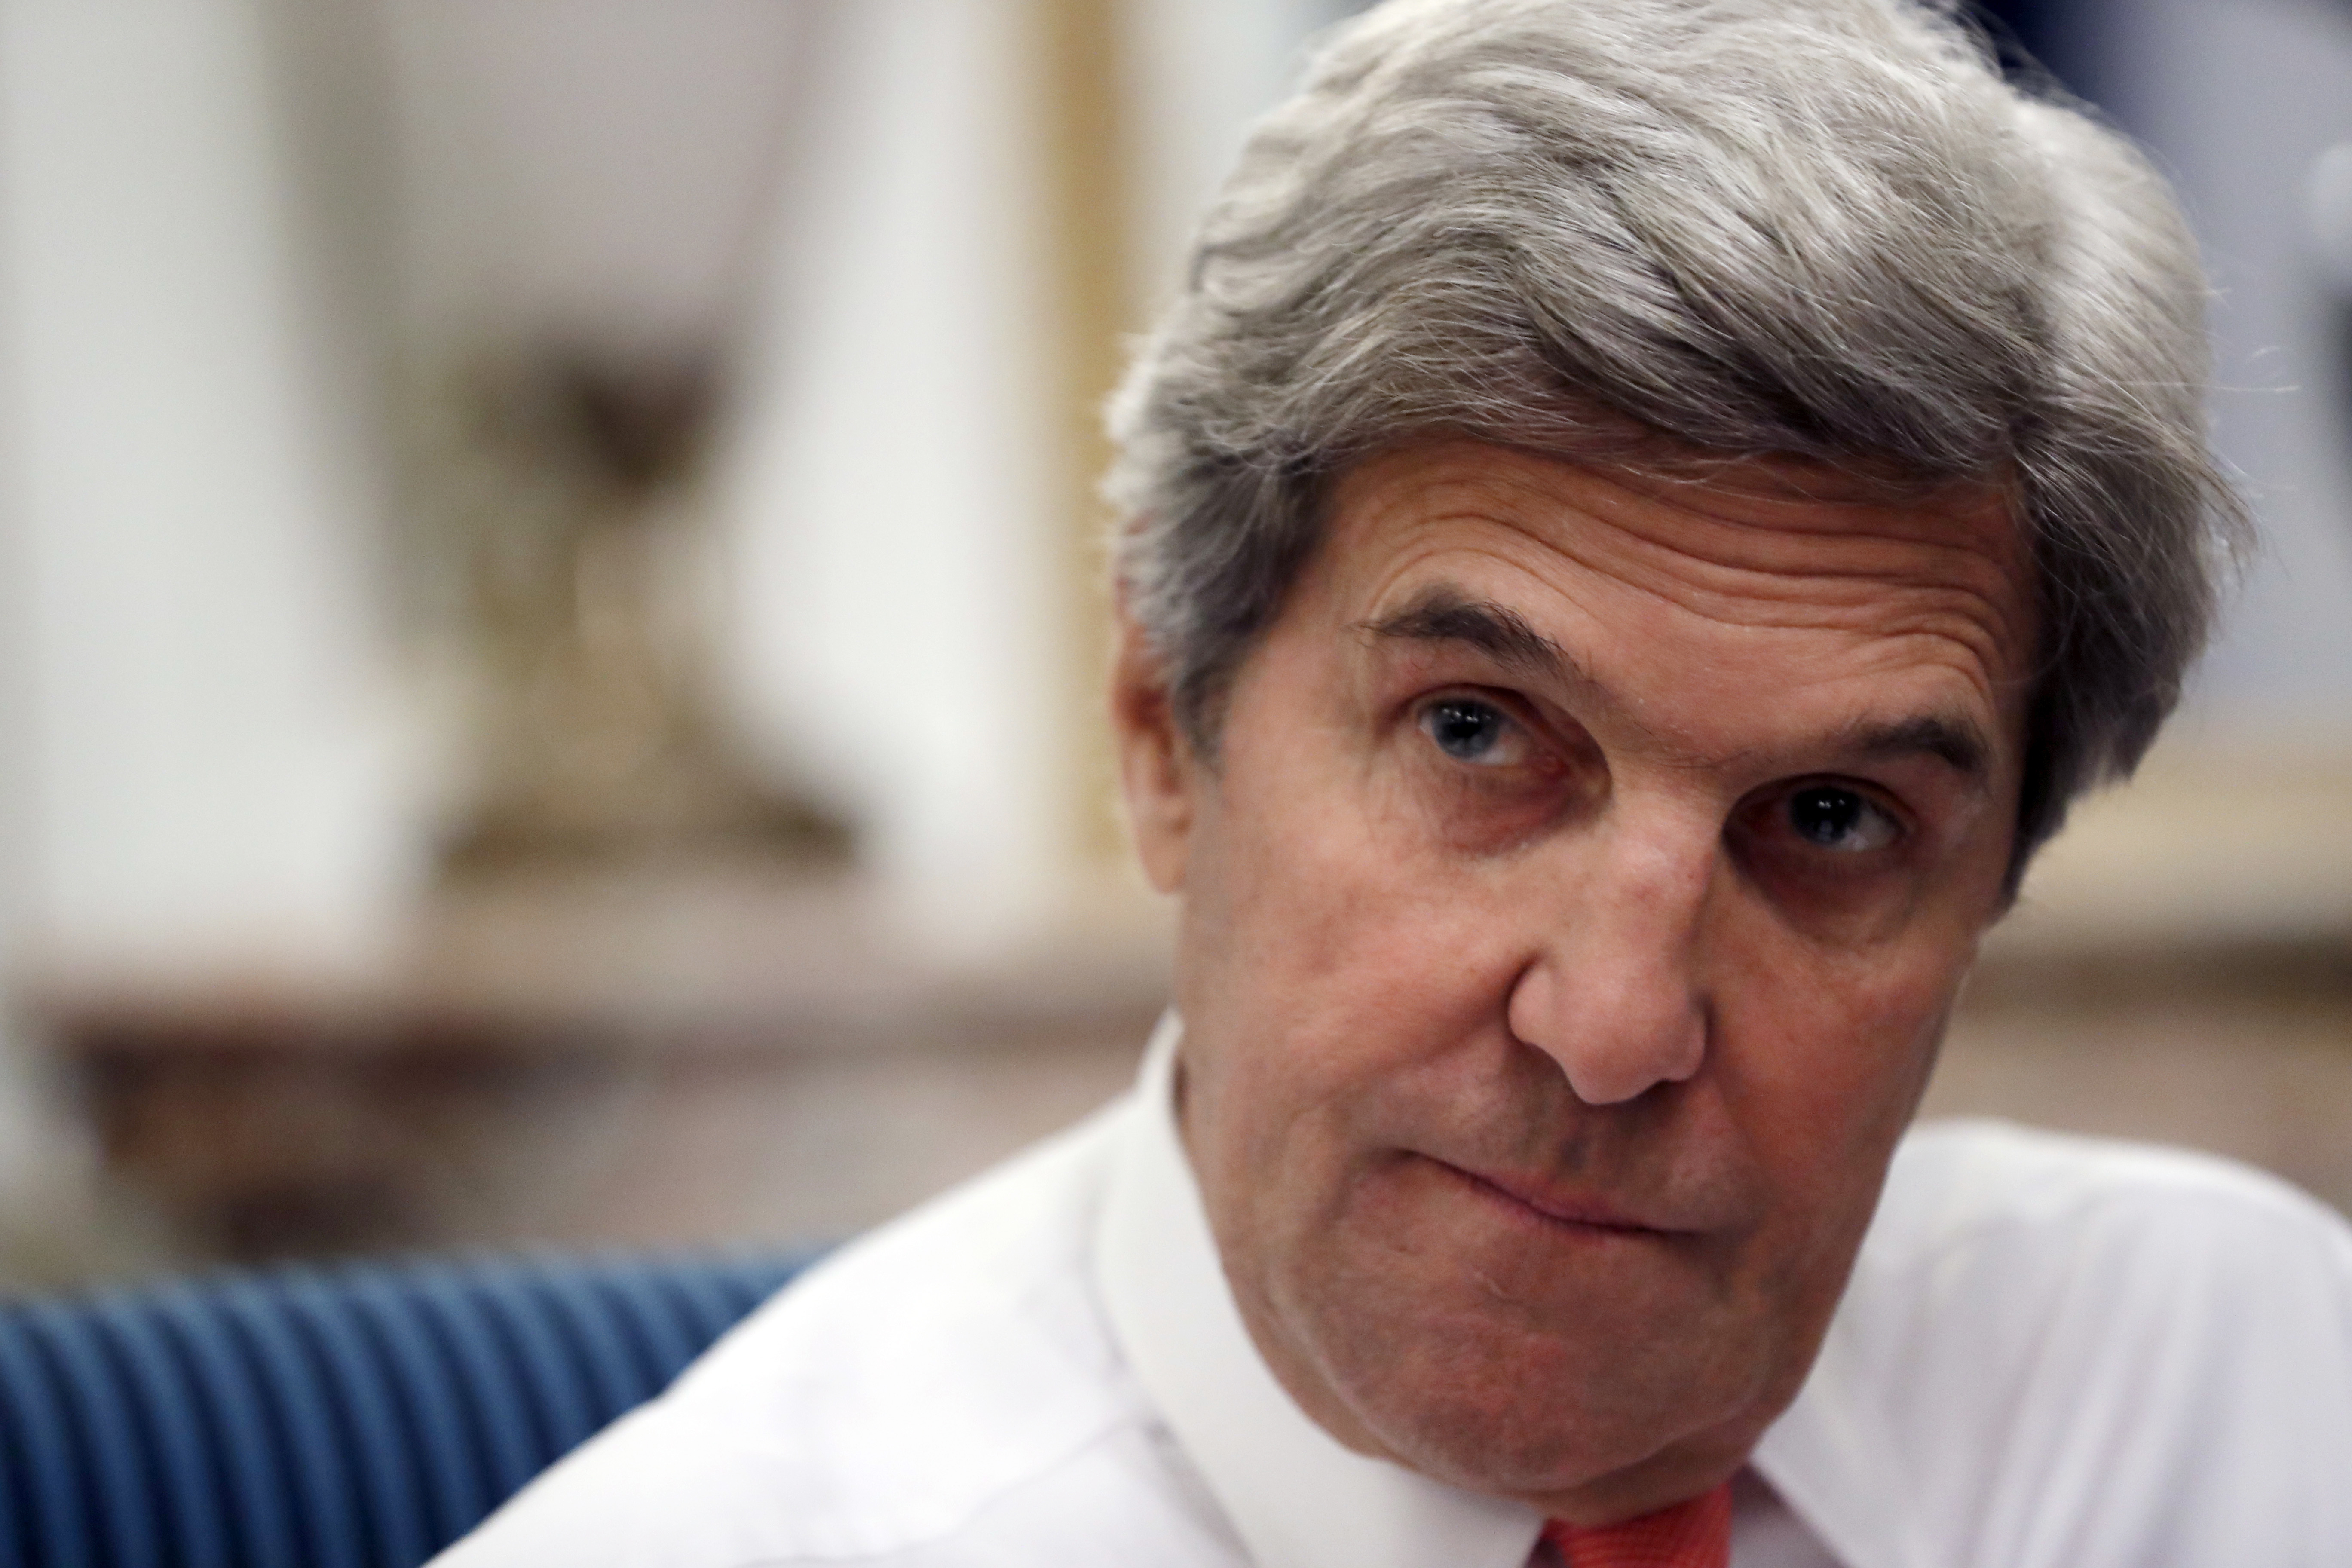 John Kerry exits climate advisory board to join Biden administration